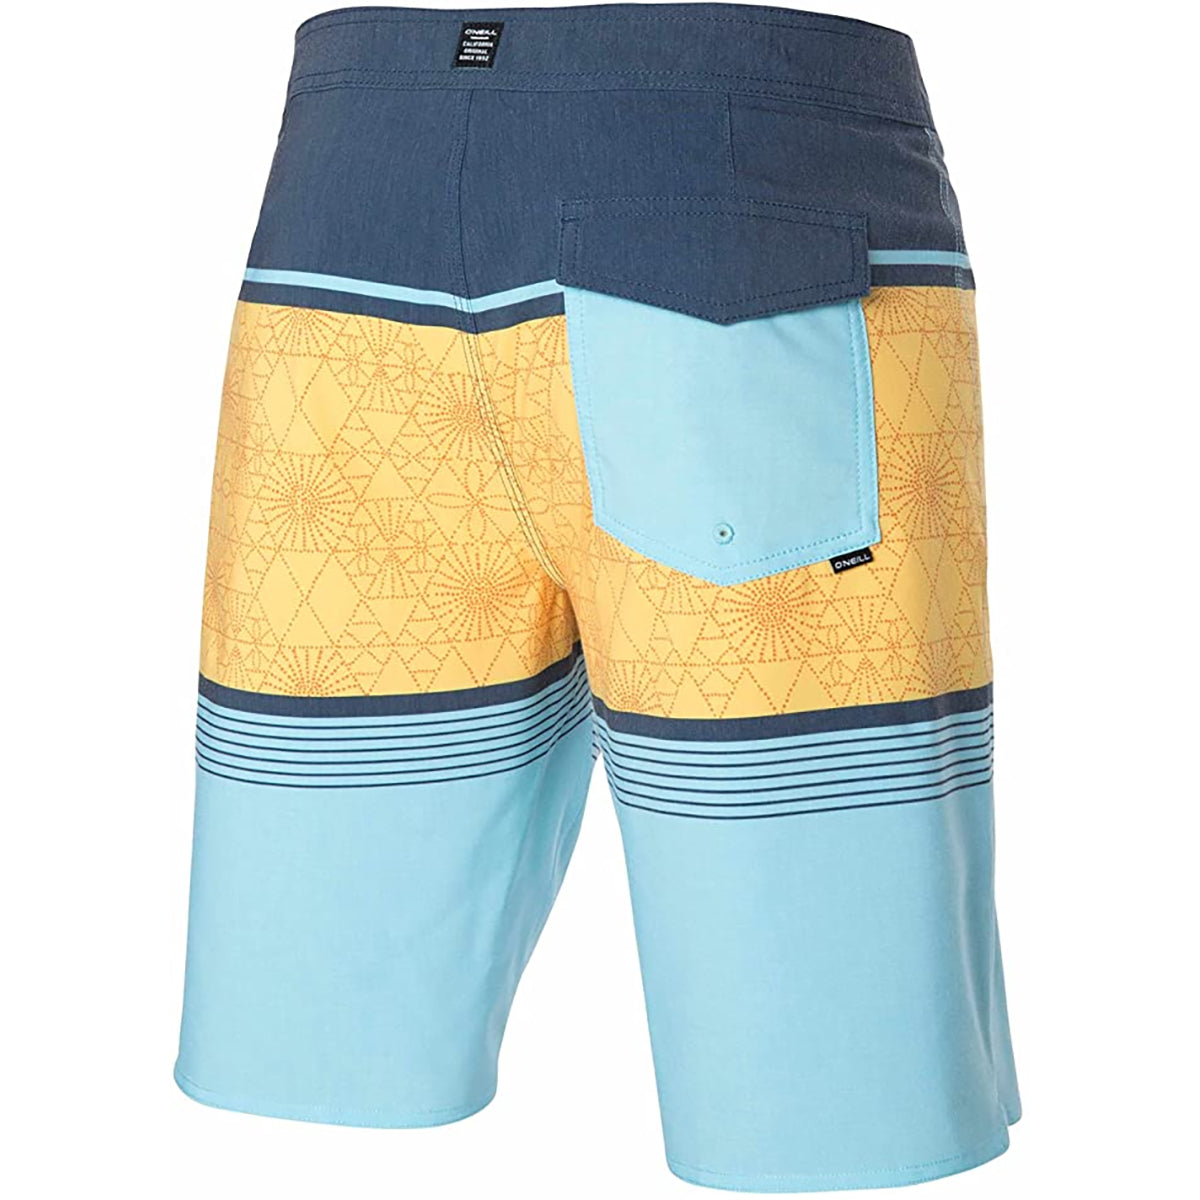 O'Neill Hyperfreak Dynasty Men's Boardshort Shorts - Gold